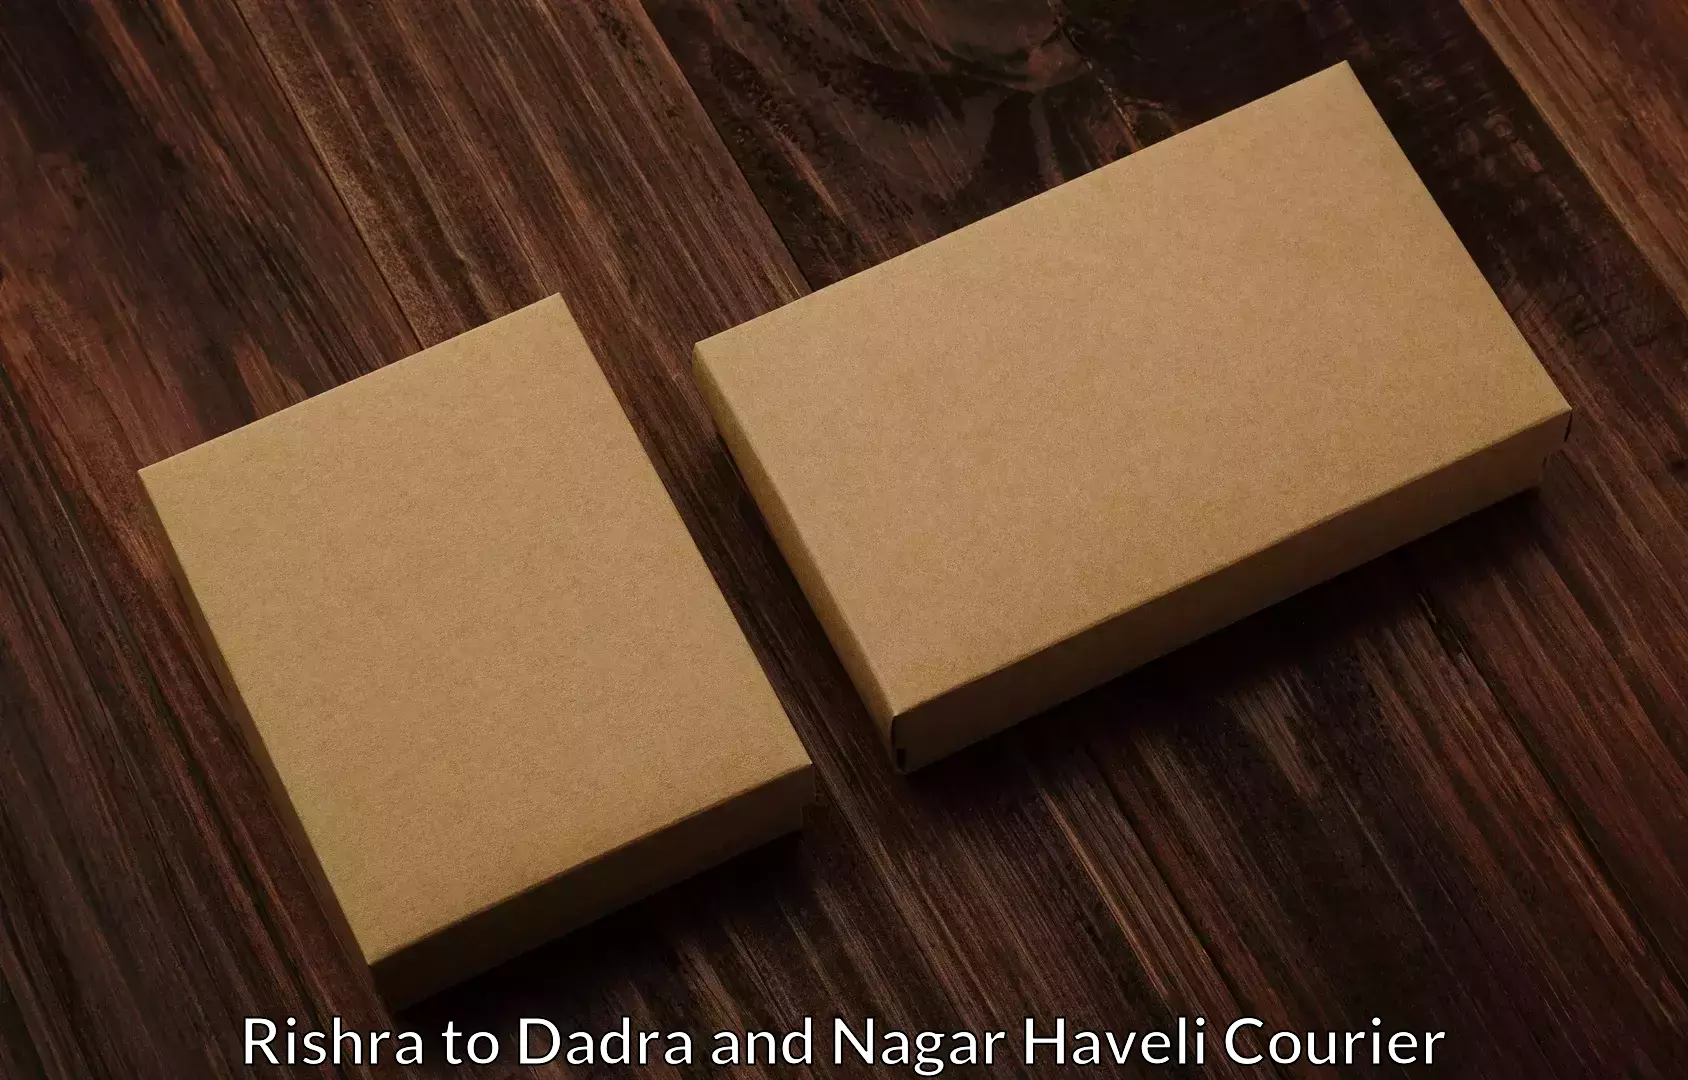 Full-service movers Rishra to Dadra and Nagar Haveli